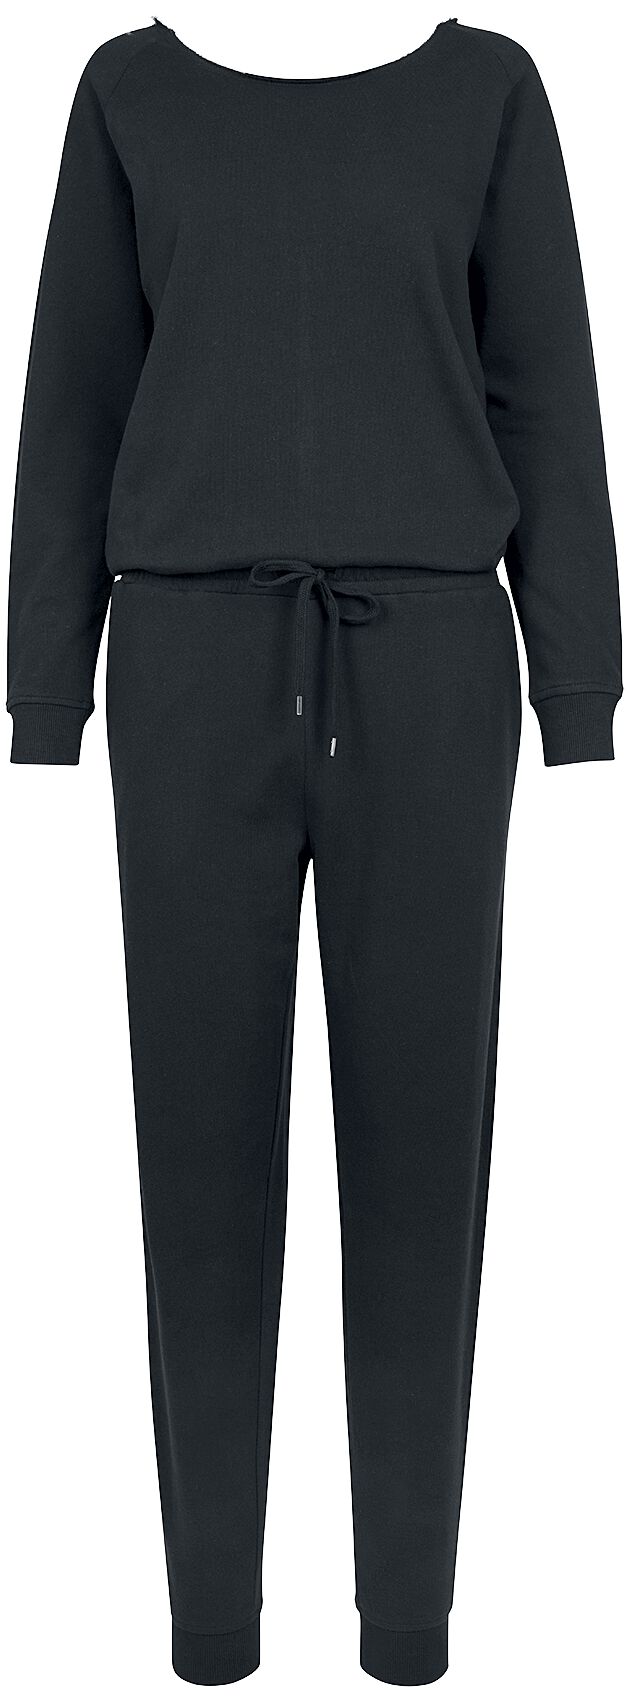 Urban Classics Ladies Long Sleeve Terry Jumpsuit Jumpsuit black